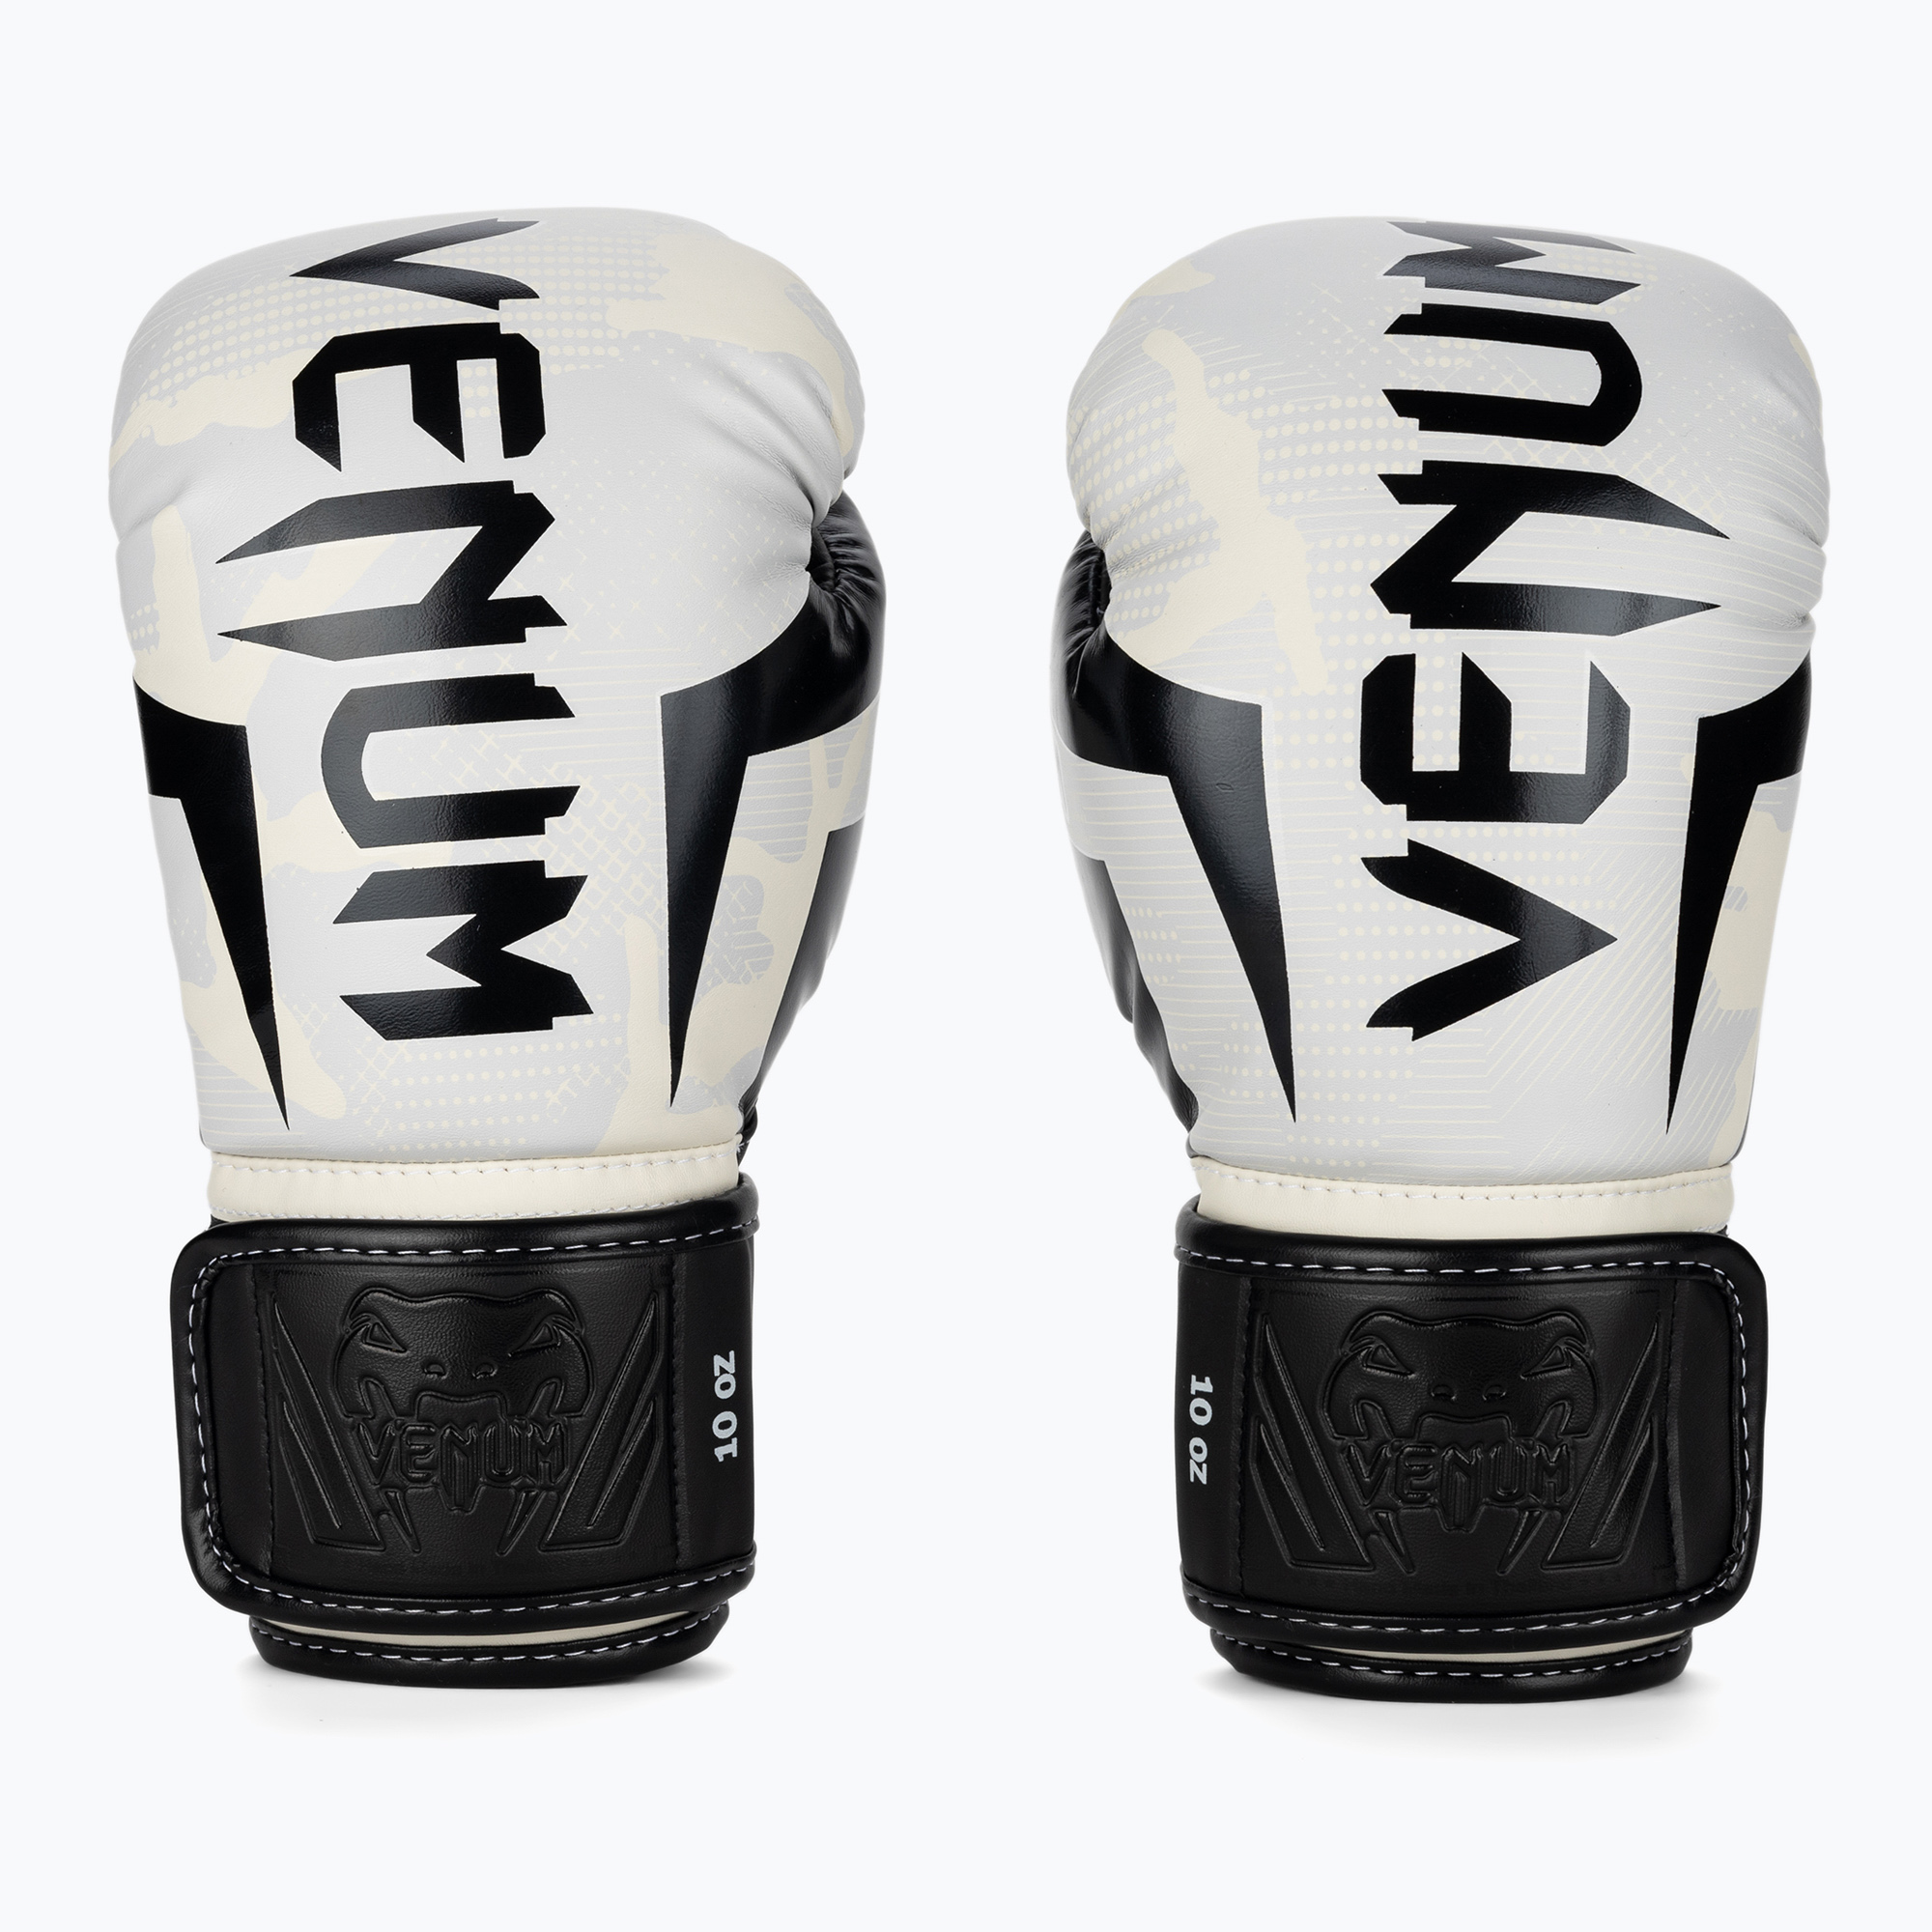 Mănuși de box Venum Elite white/camo